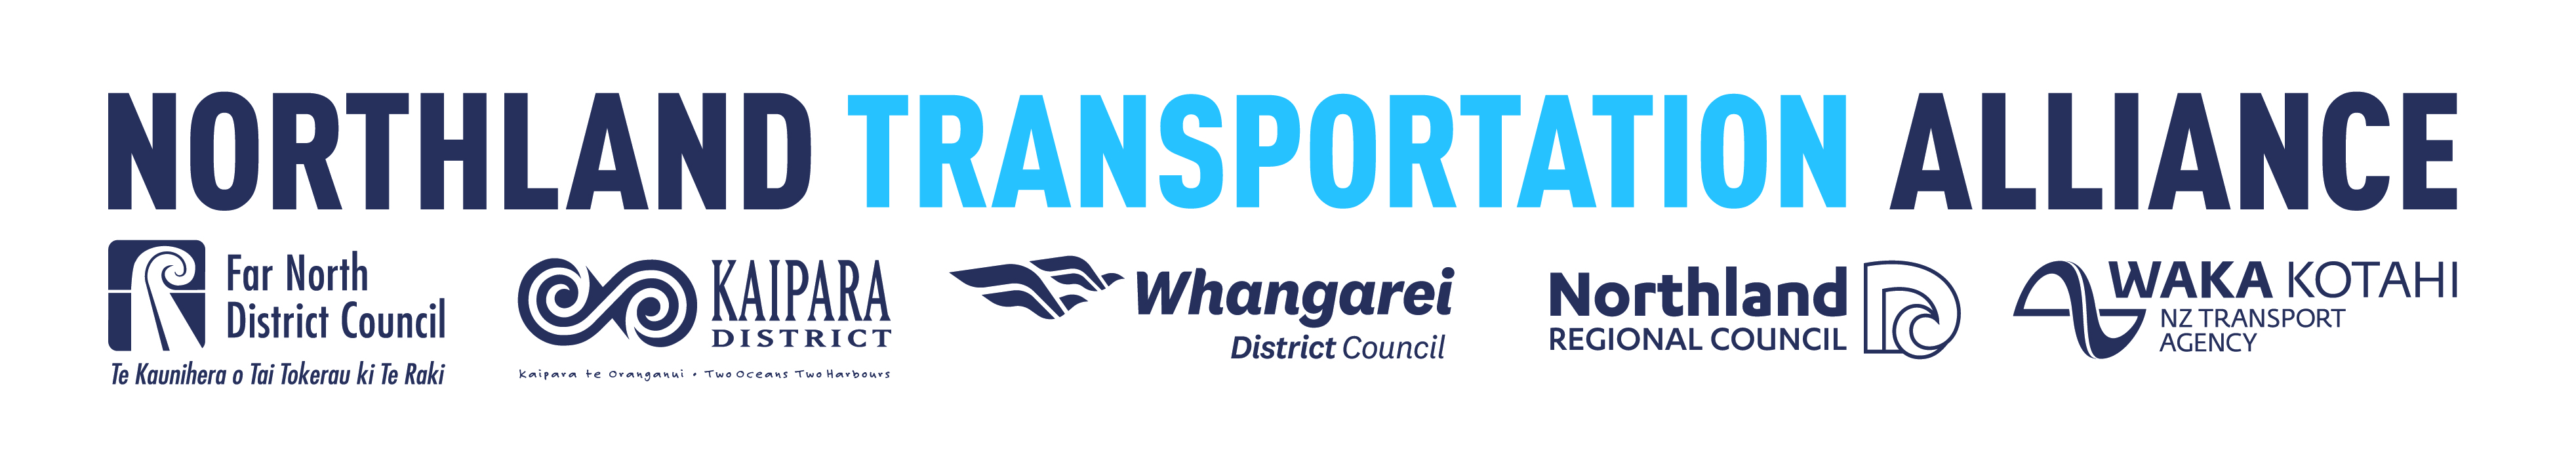 Northland Transportation Alliance logo